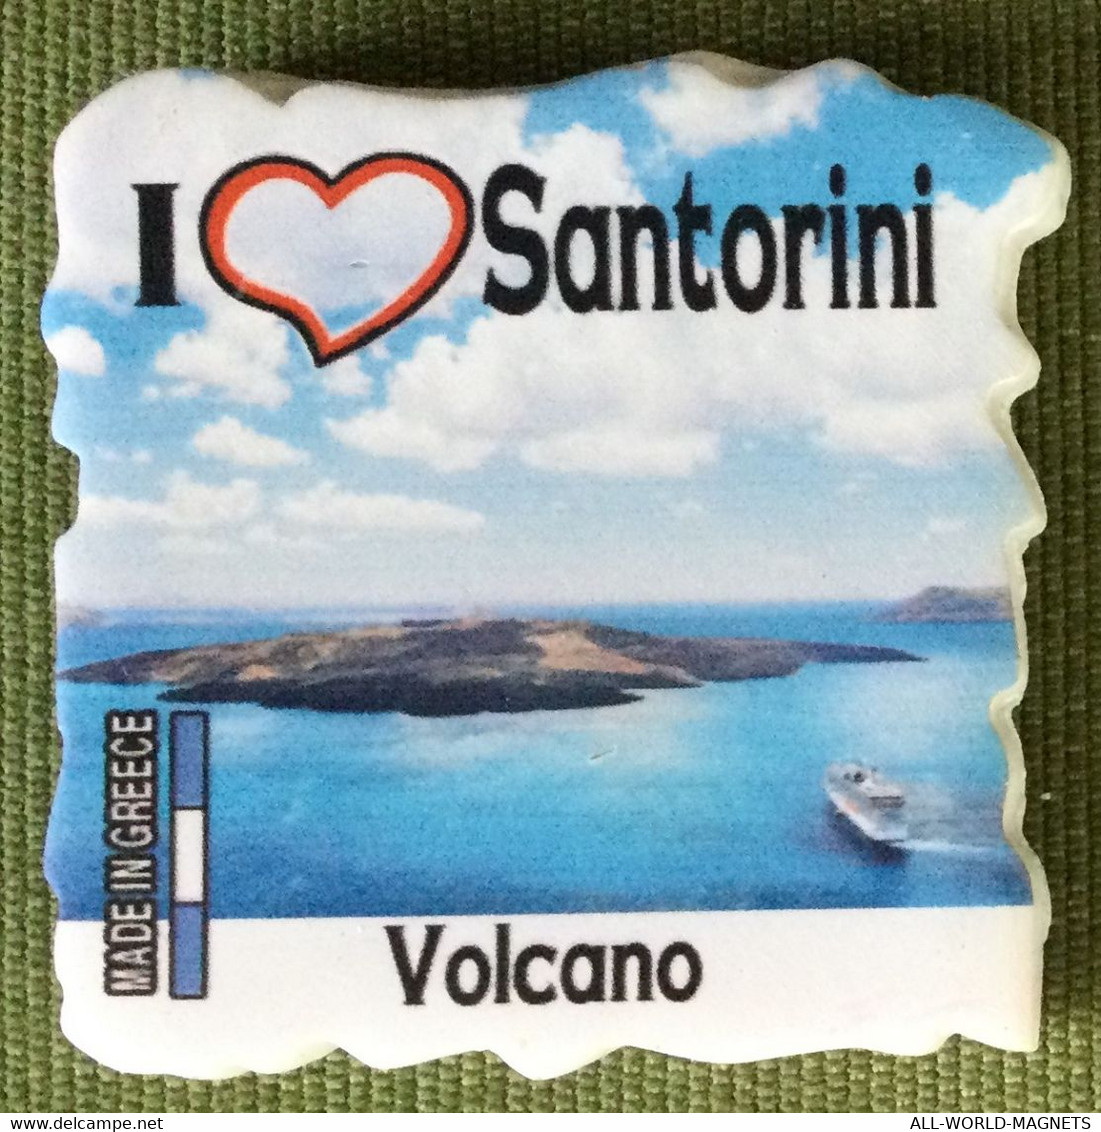 Volcano Santorini Island Greece Fridge Magnet Souvenir - Tourism